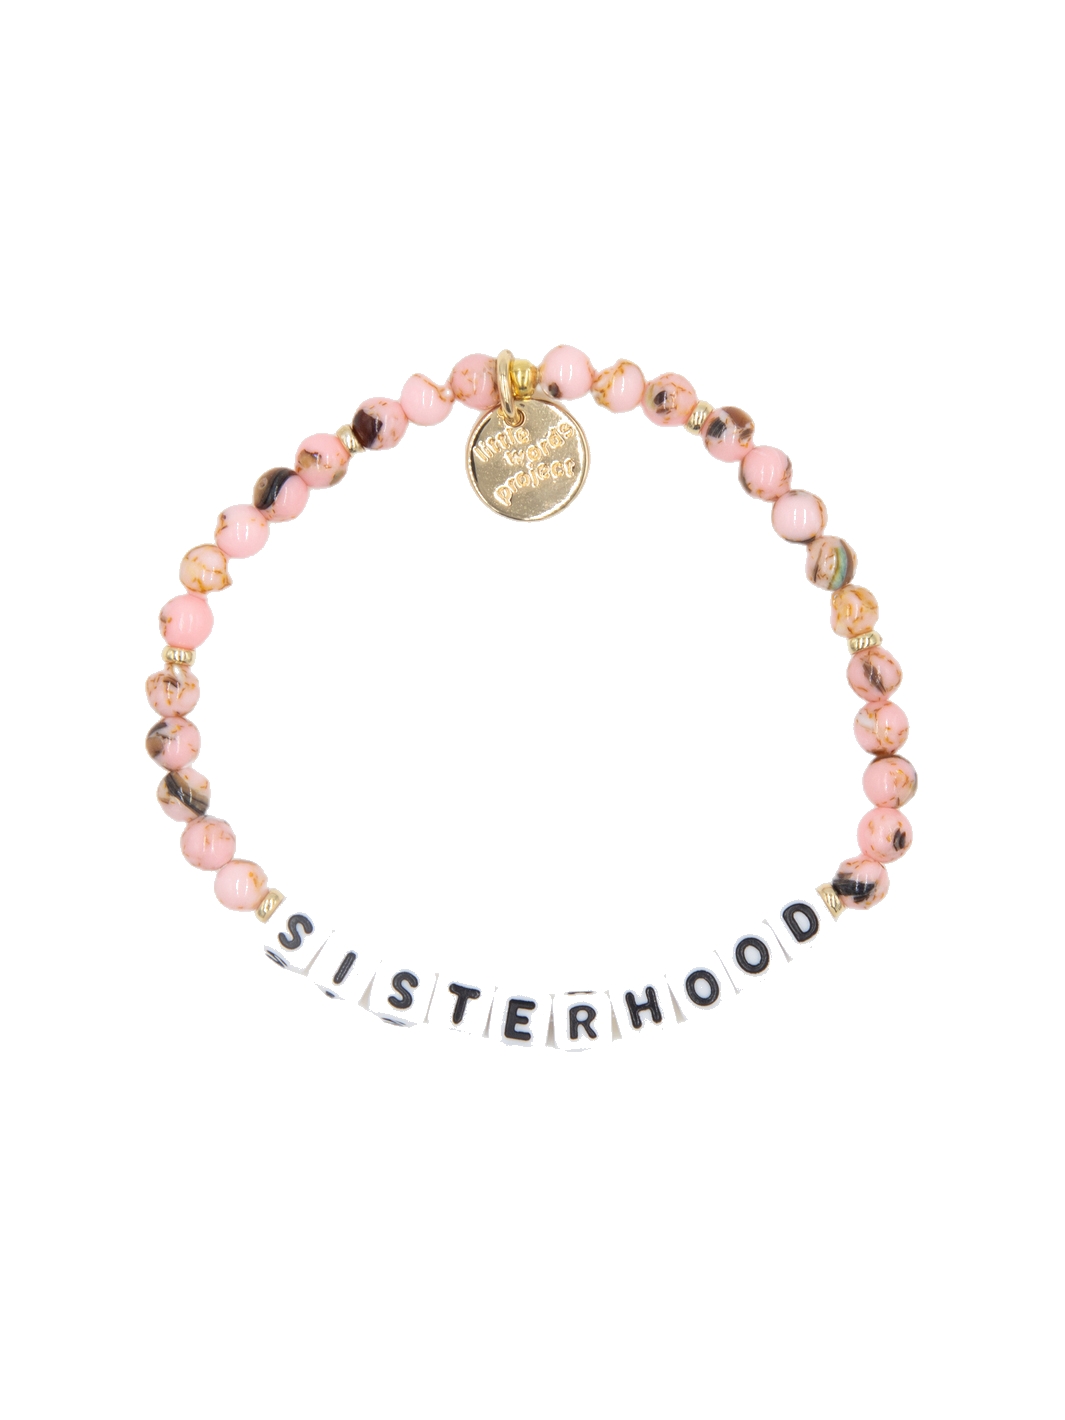 little-words-project-sisterhood-bracelet-pink-agate - Shaina Rosenthal.jpg